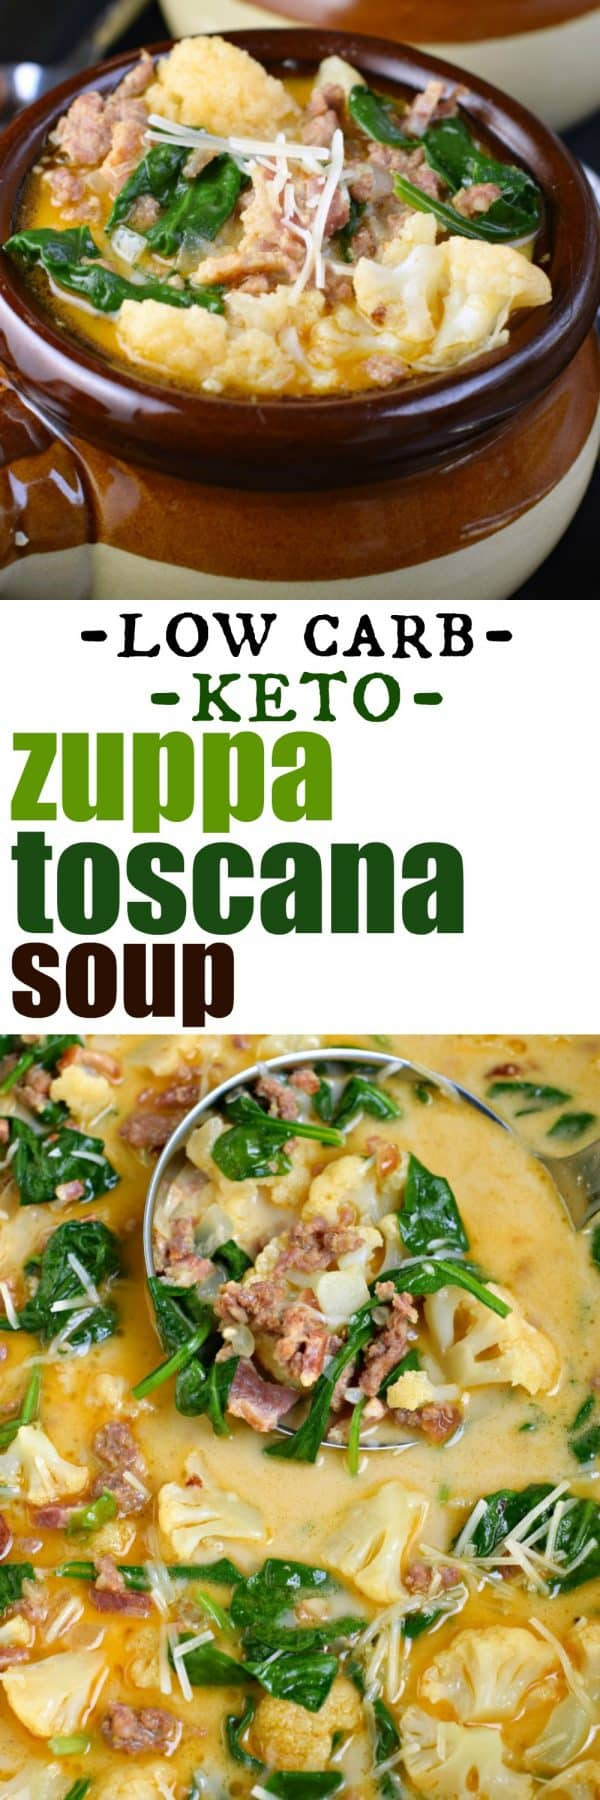 Zuppa Toscana Soup Crockpot Keto
 Easy Low Carb Keto Zuppa Toscana Soup Recipe